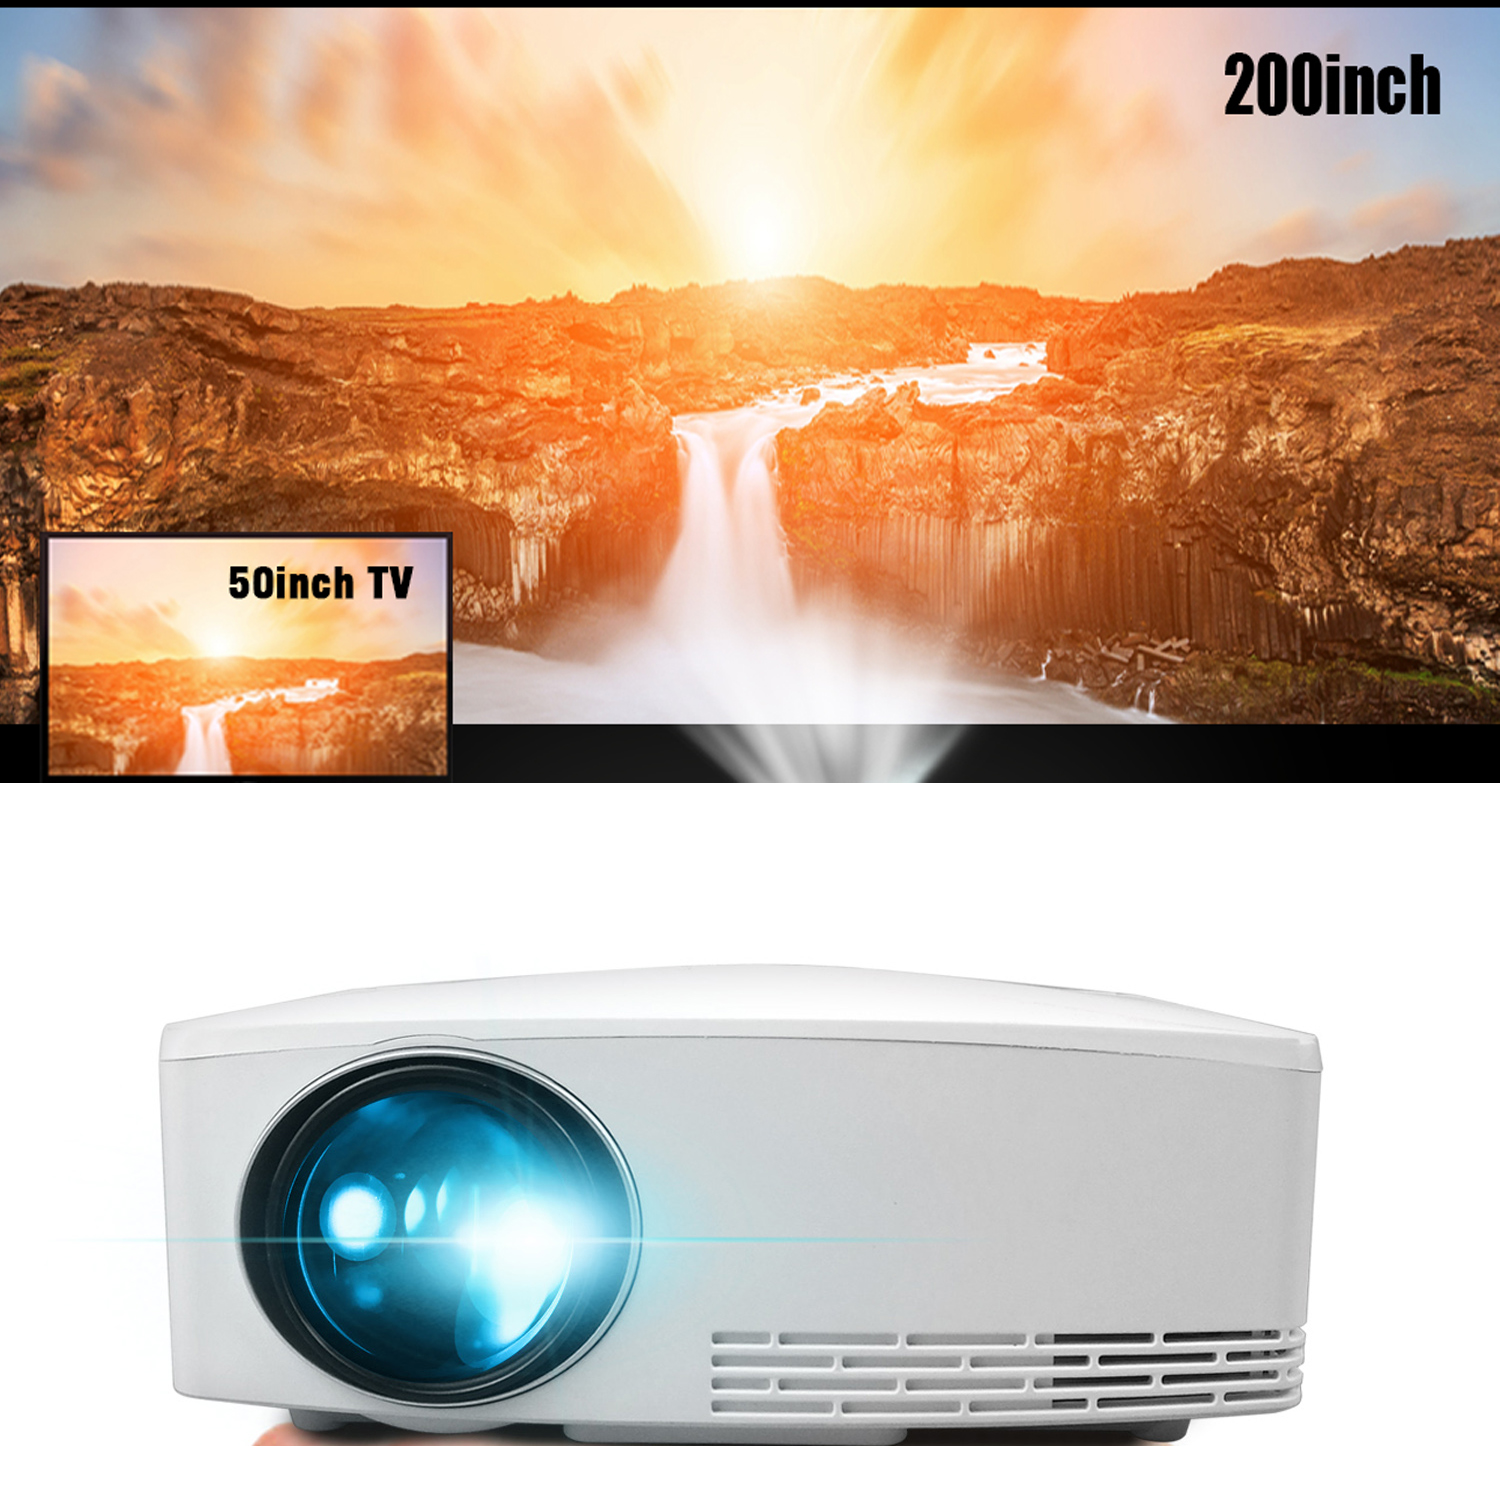 fastfox led lcd projector 2600 lumen ebay